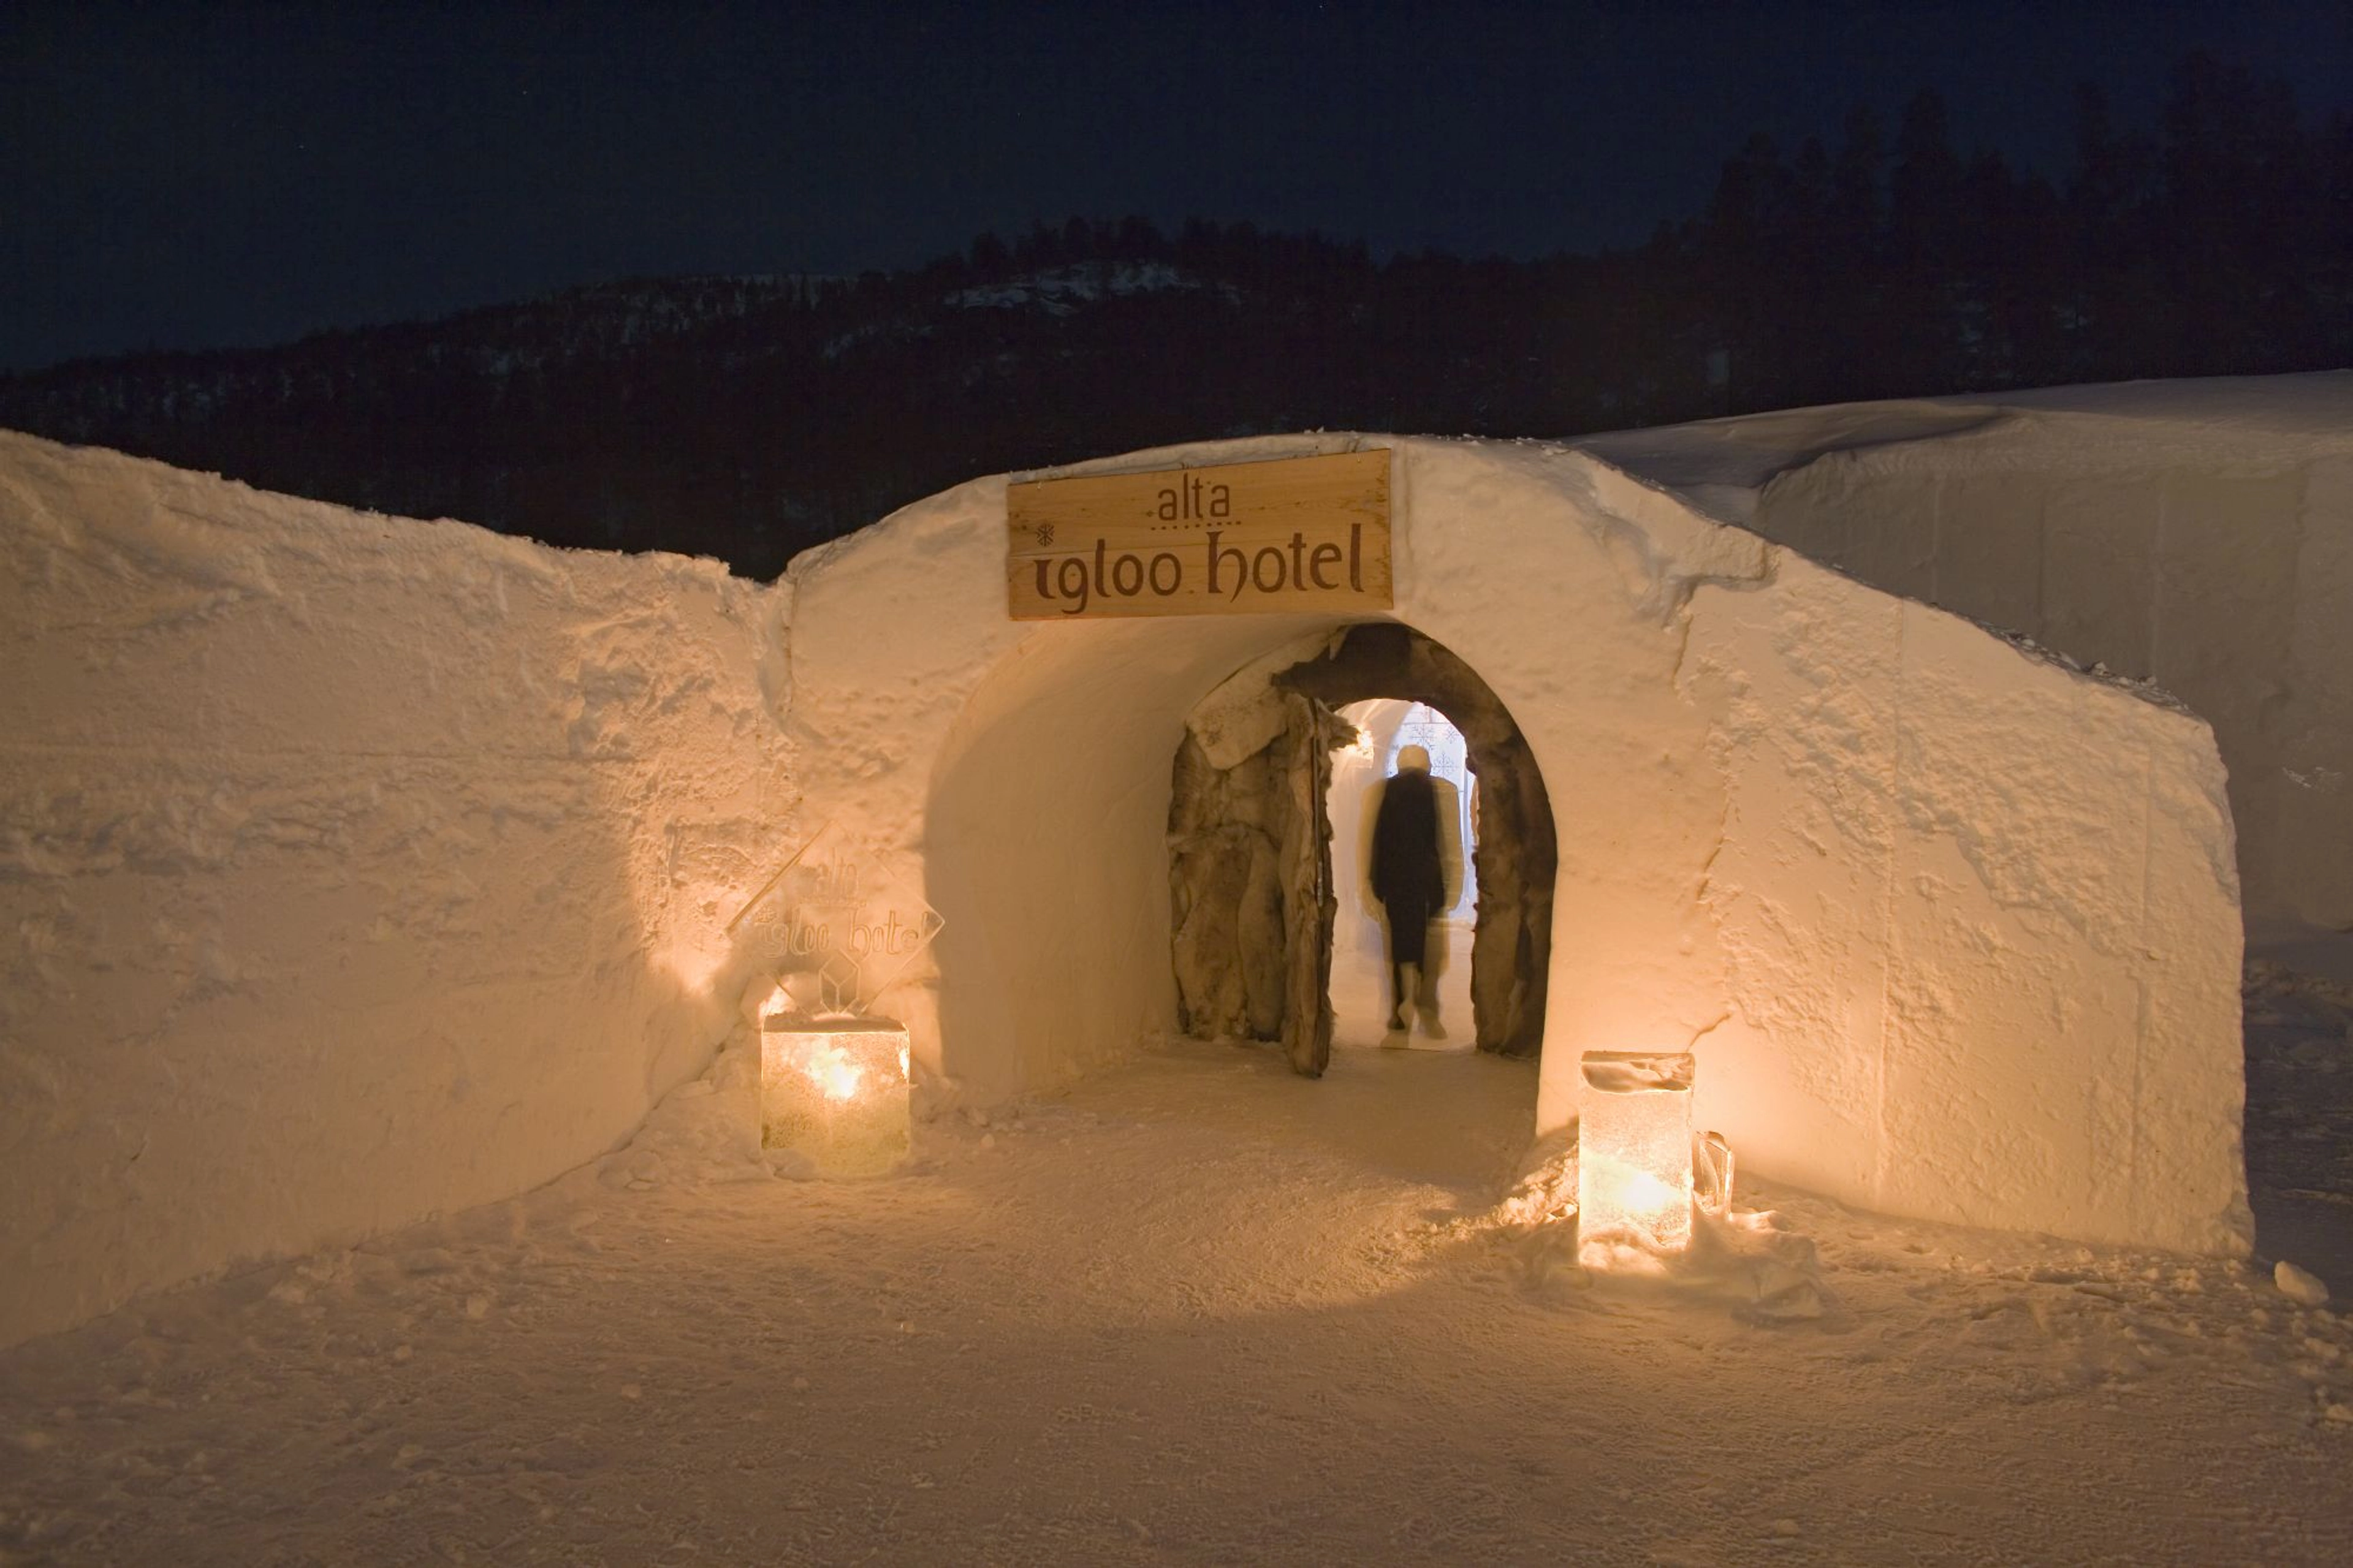 Iglo hotel in Alta  - Norway